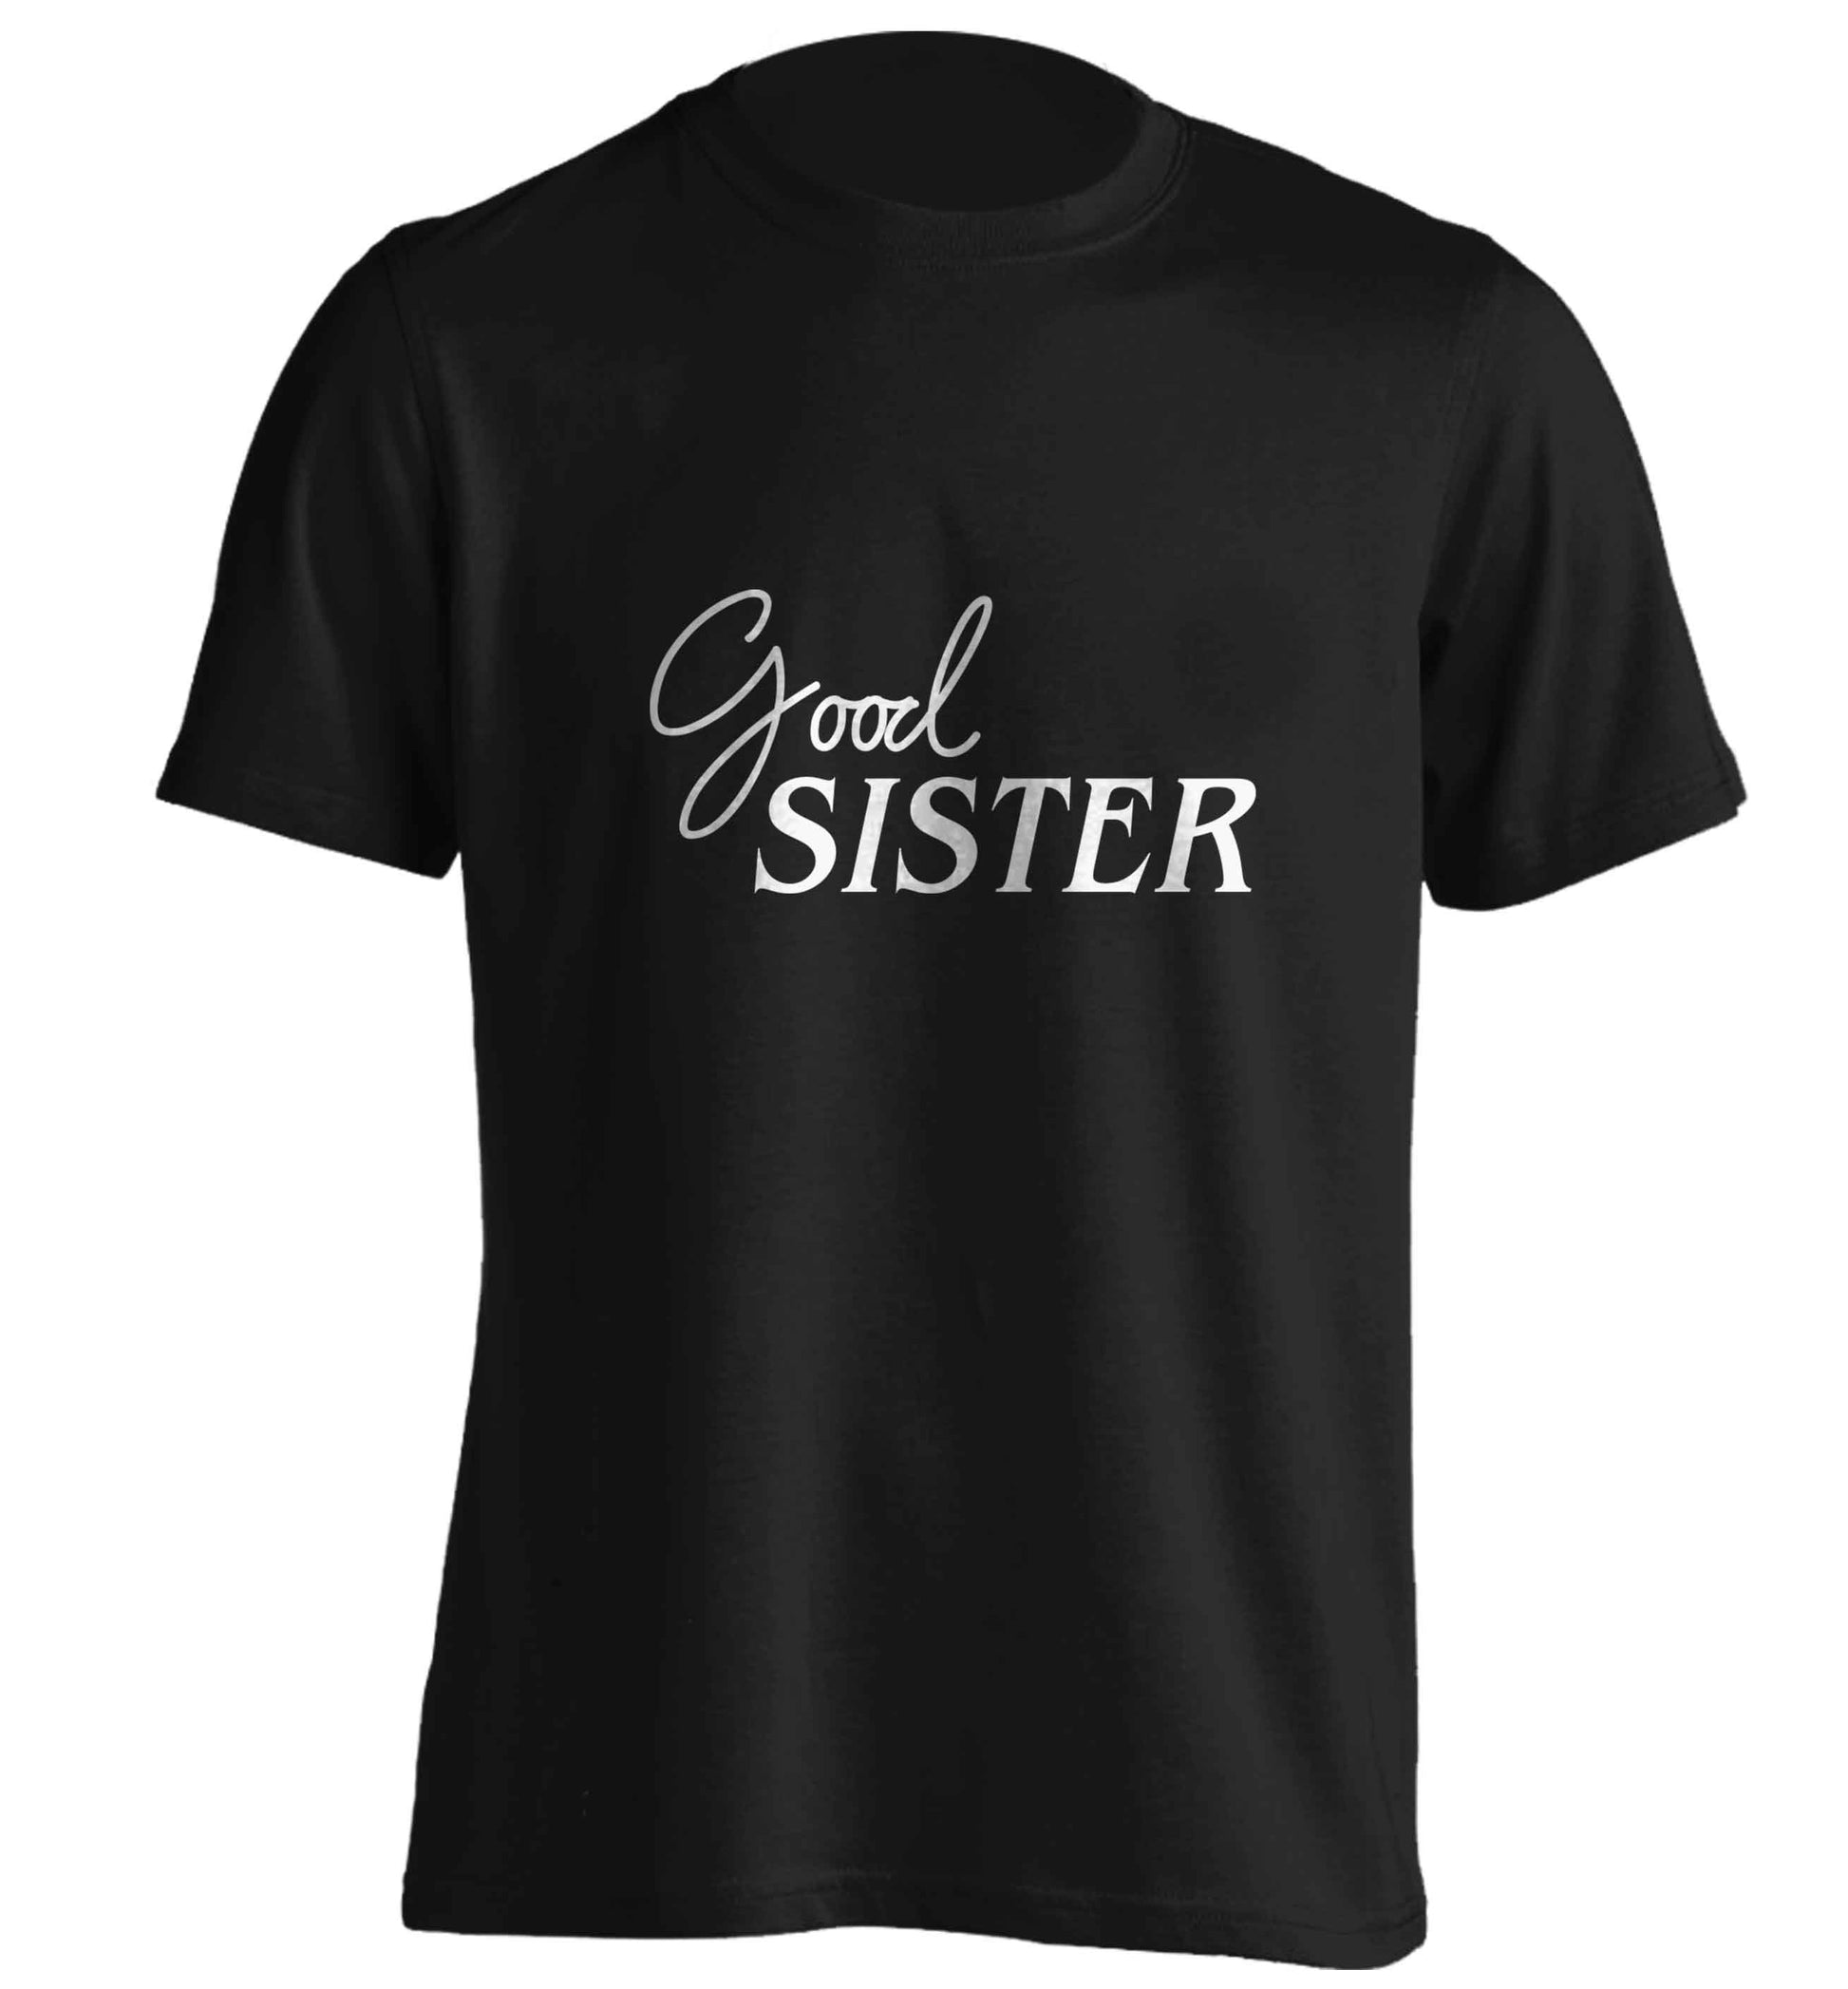 Good sister adults unisex black Tshirt 2XL